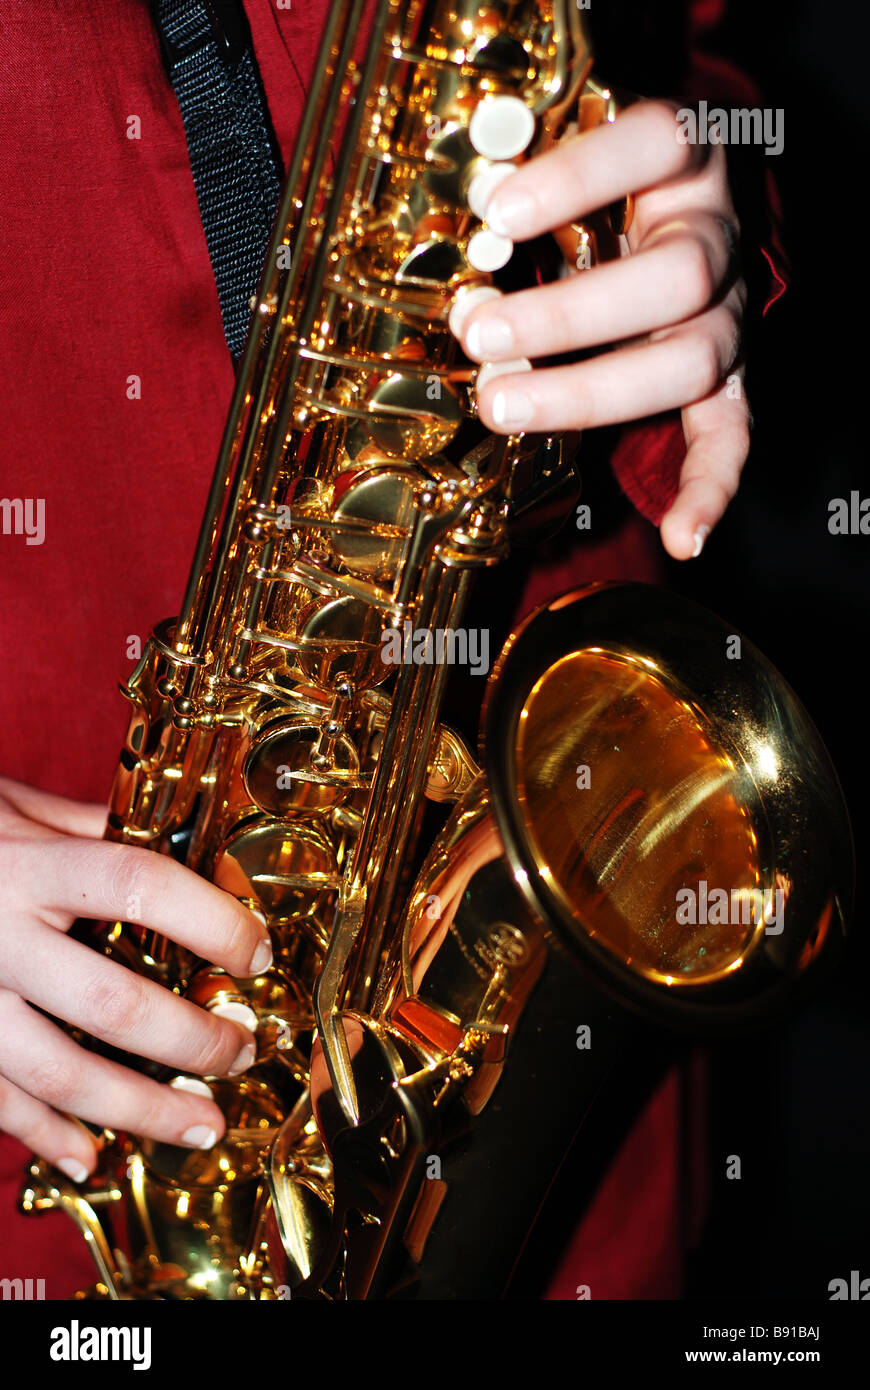 Saxophone close up Stock Photo